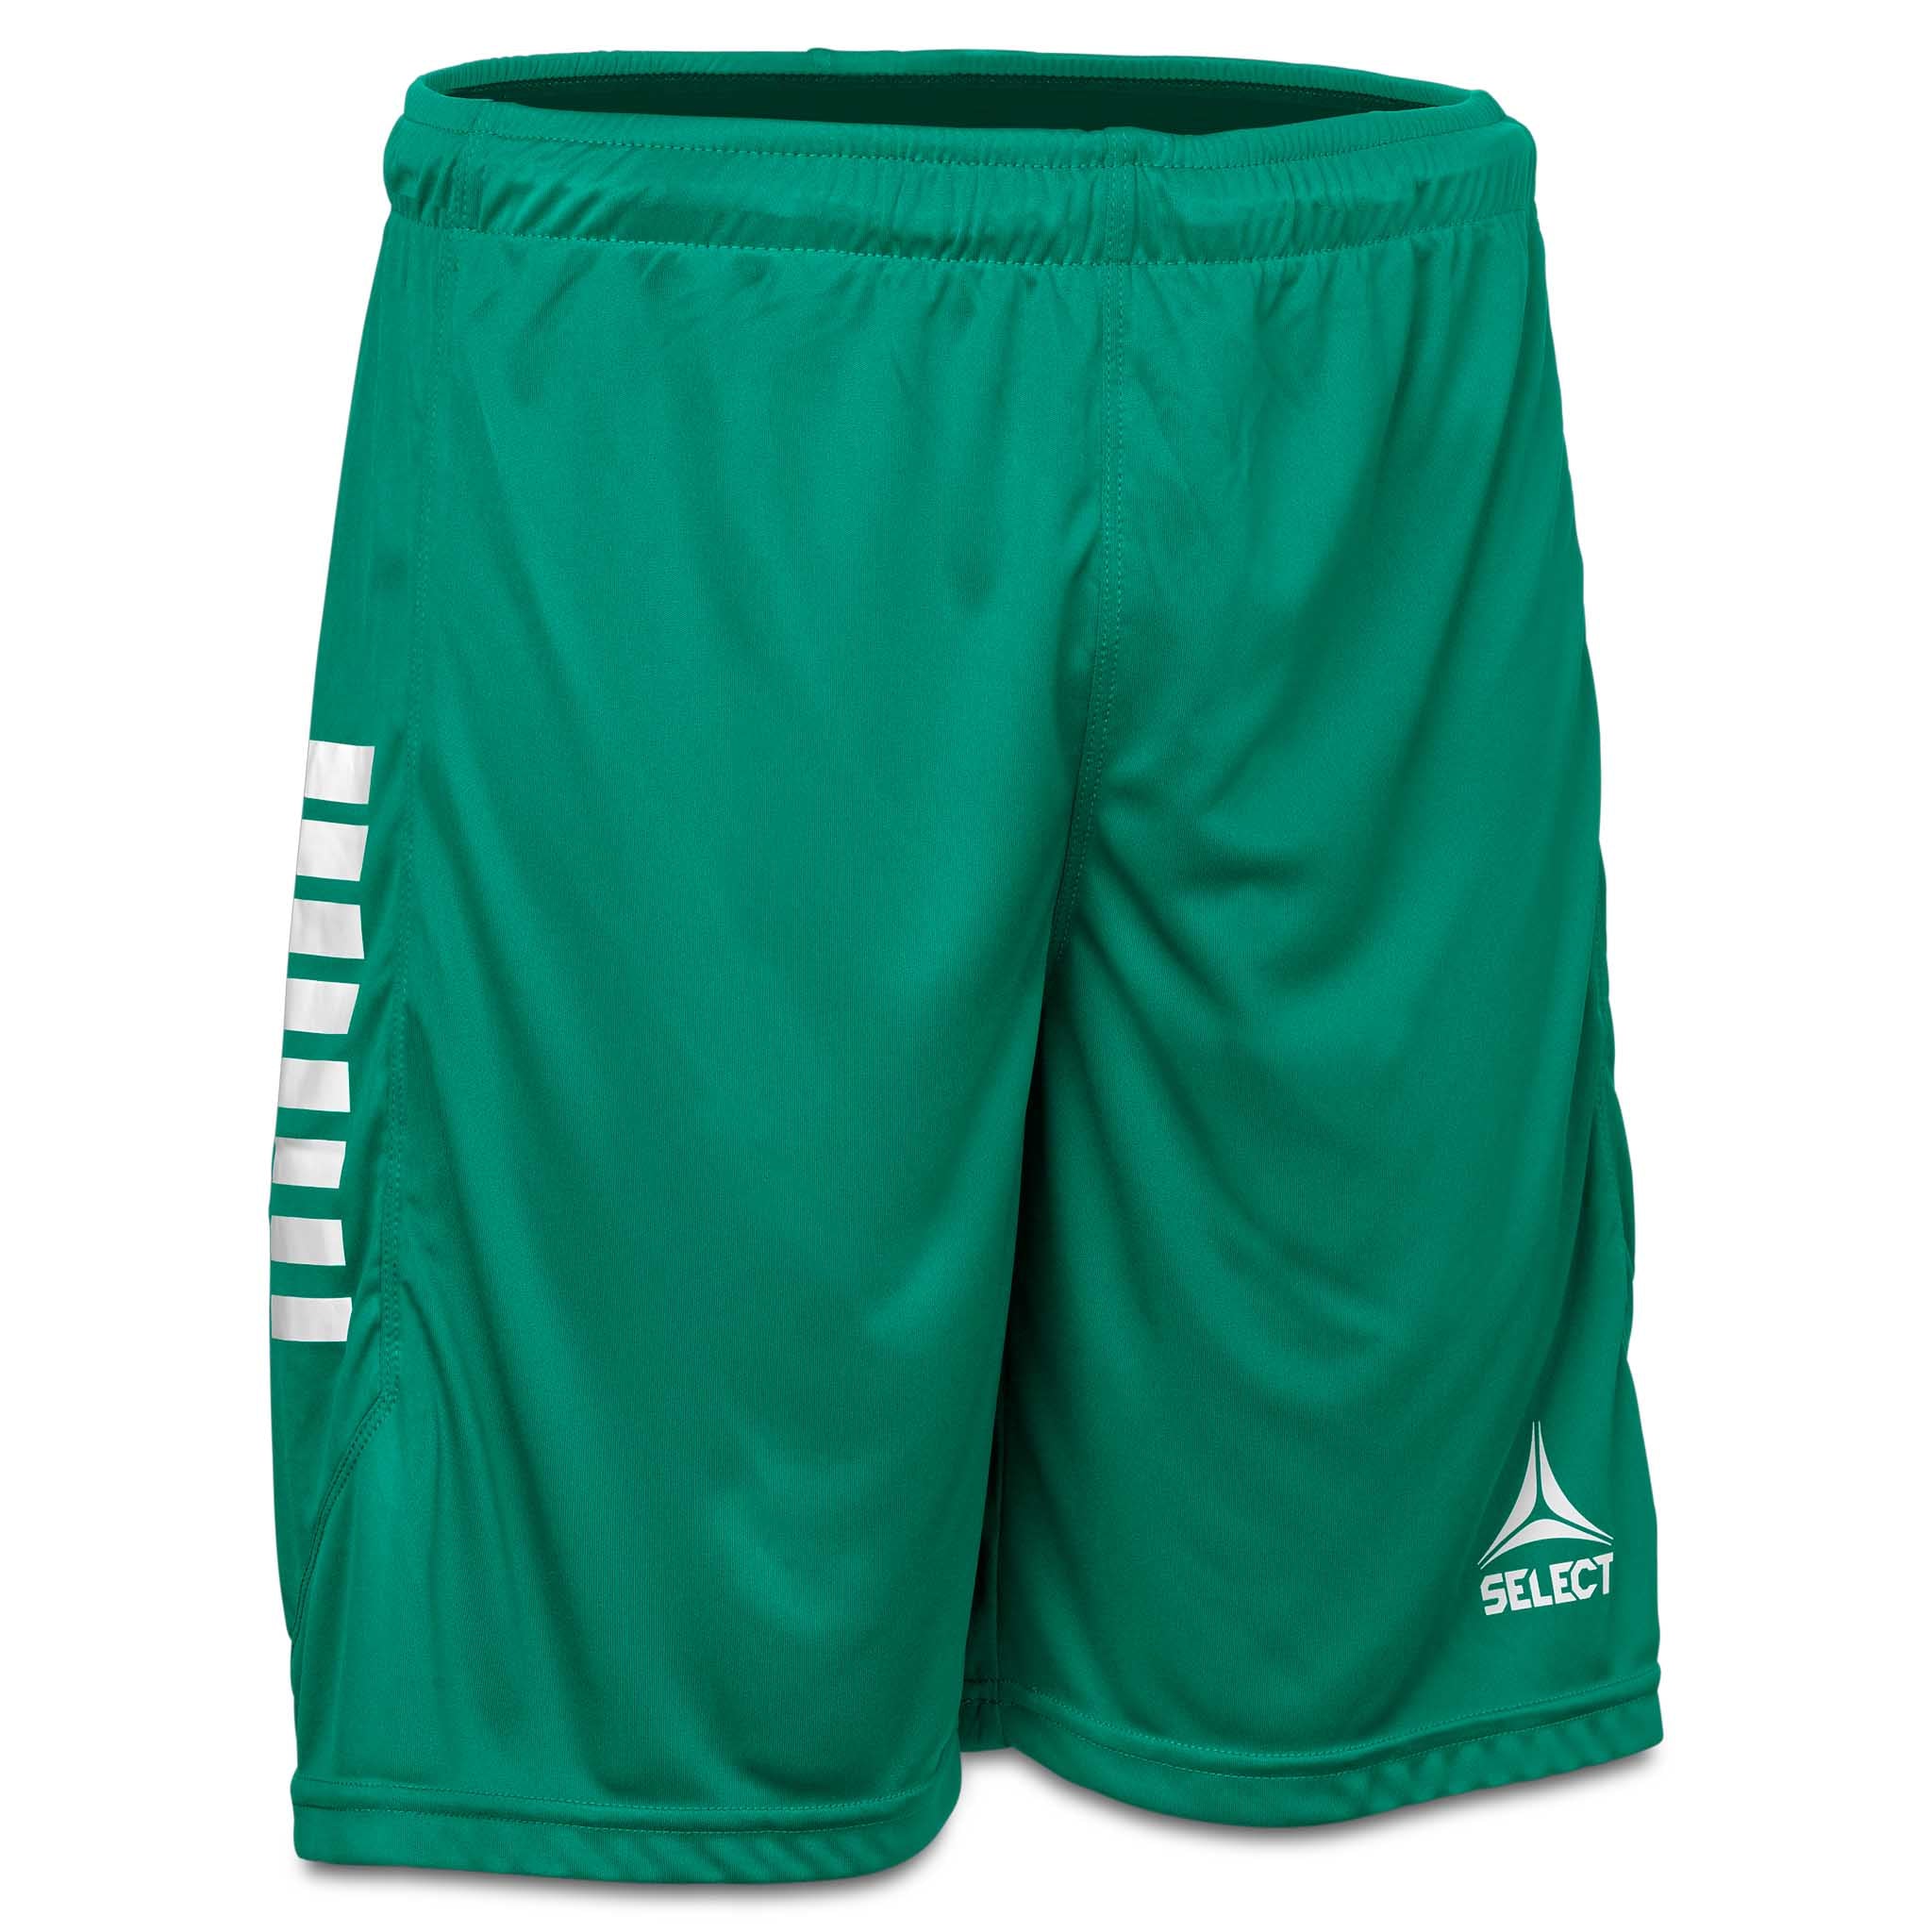 Monaco Player shorts #colour_green/white